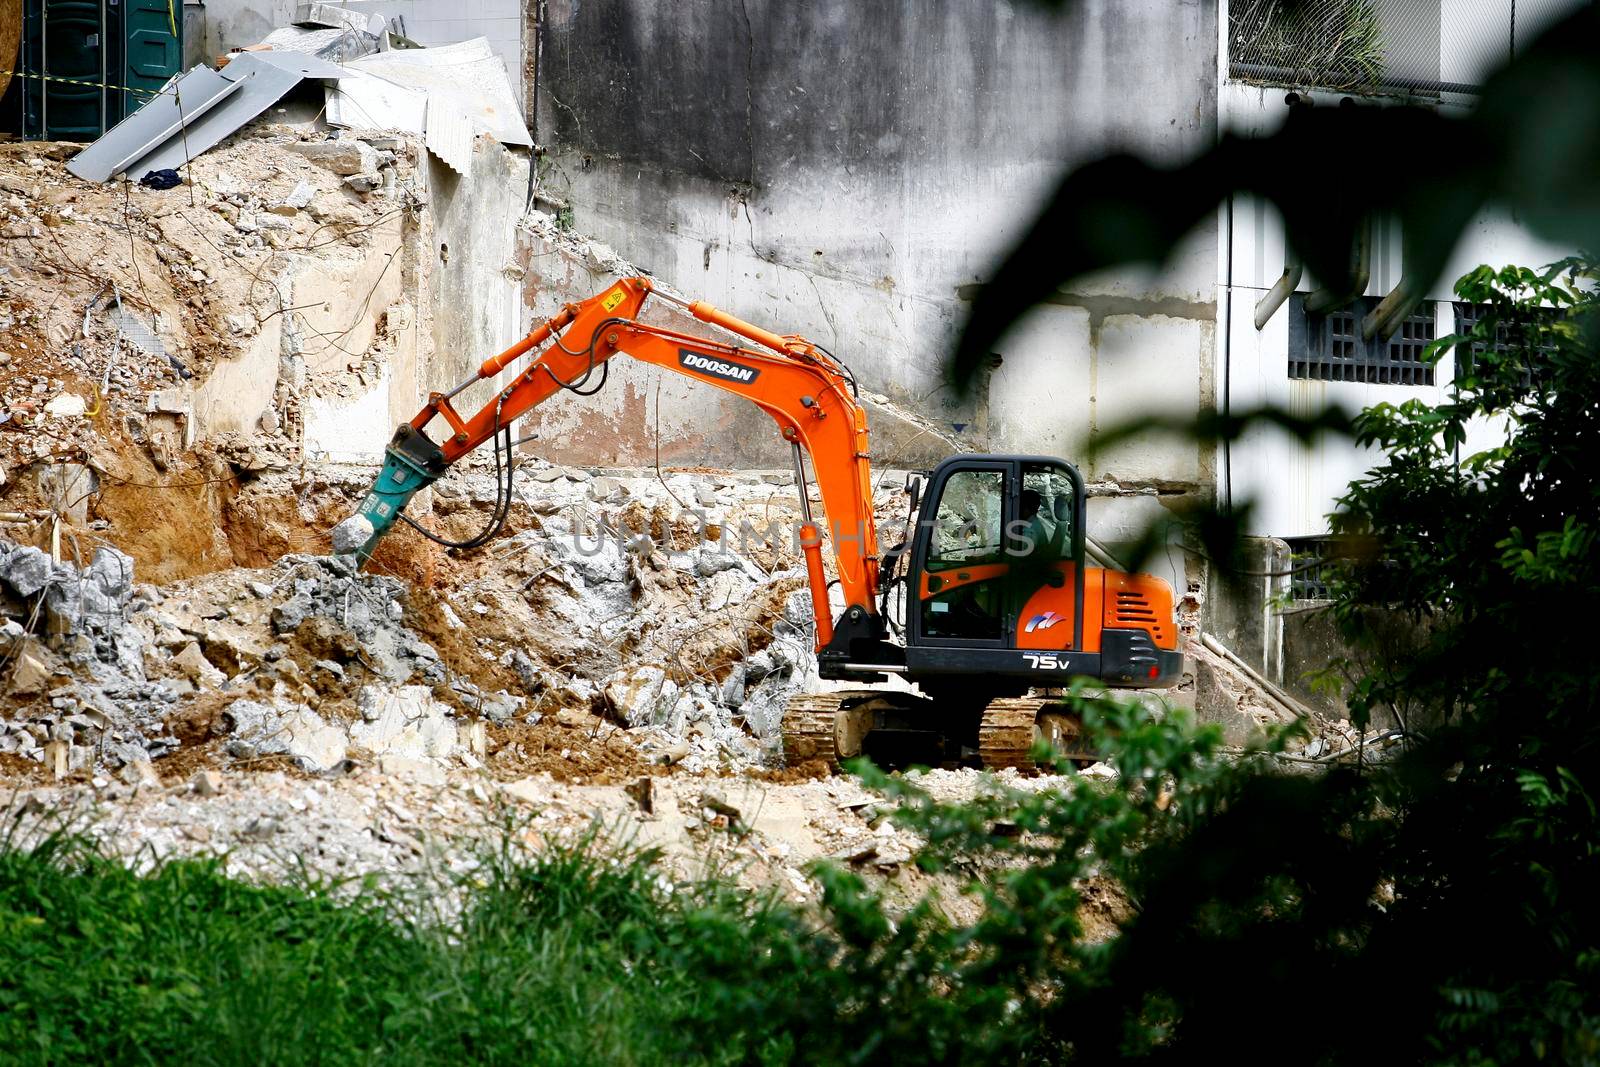 salvador, bahia / brazil - august 26, 2014: Machine is seen in the demolition of a clinic on Manoel Barreto street in Graça neighborhood, in the city of Salvador.